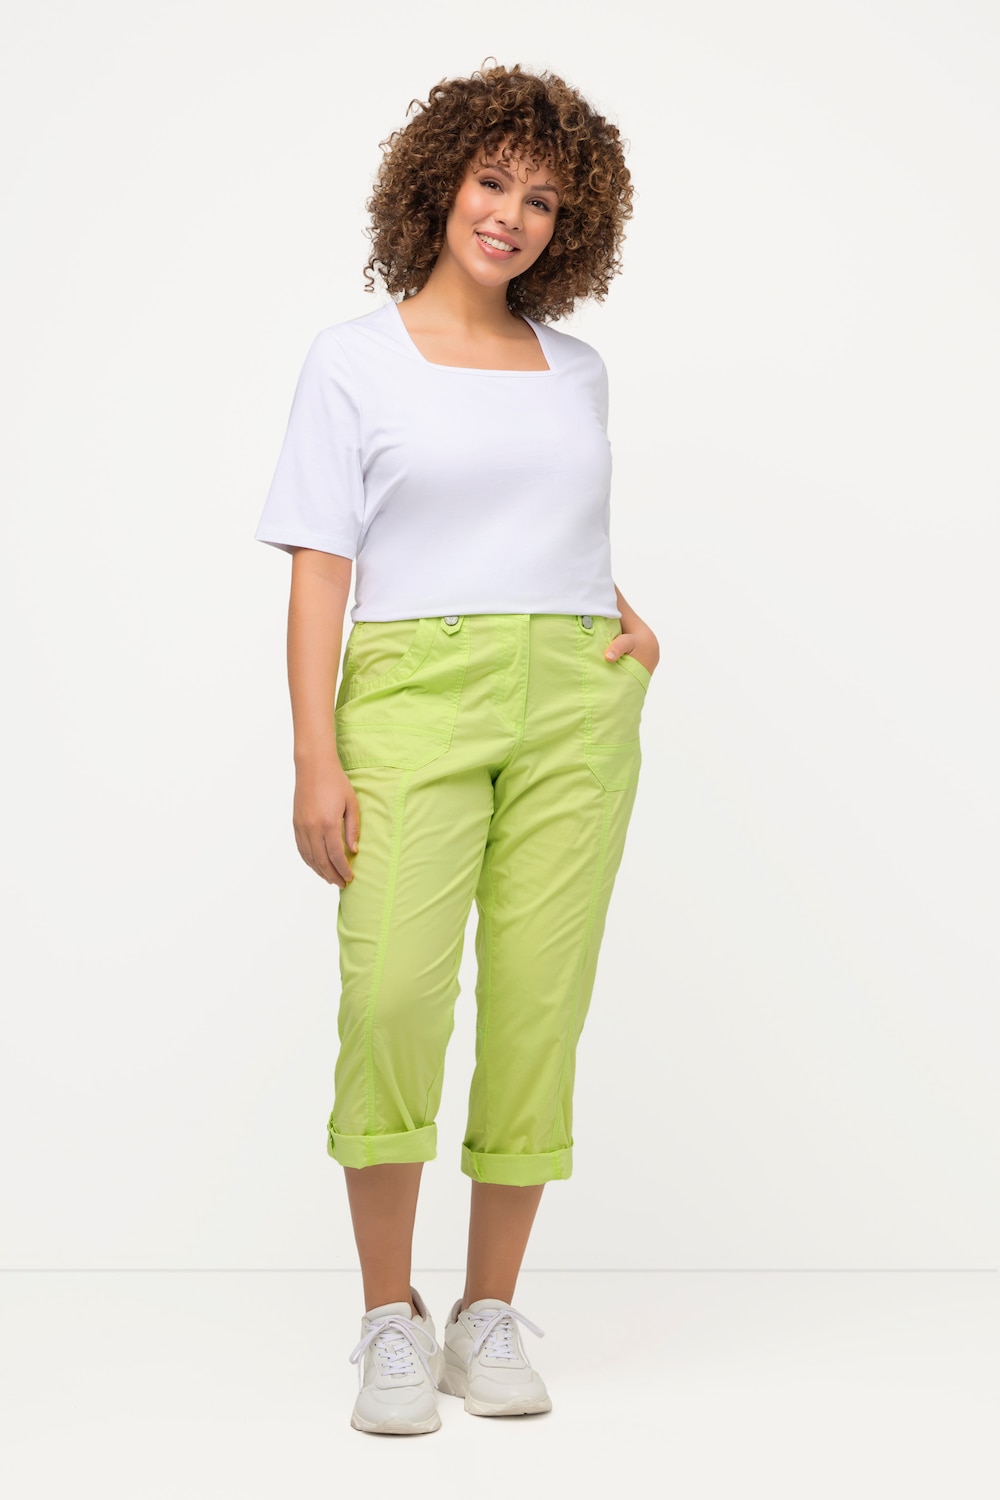 grandes tailles pantalon cargo 7/8 avec attaches, femmes, vert, taille: 46, coton, ulla popken